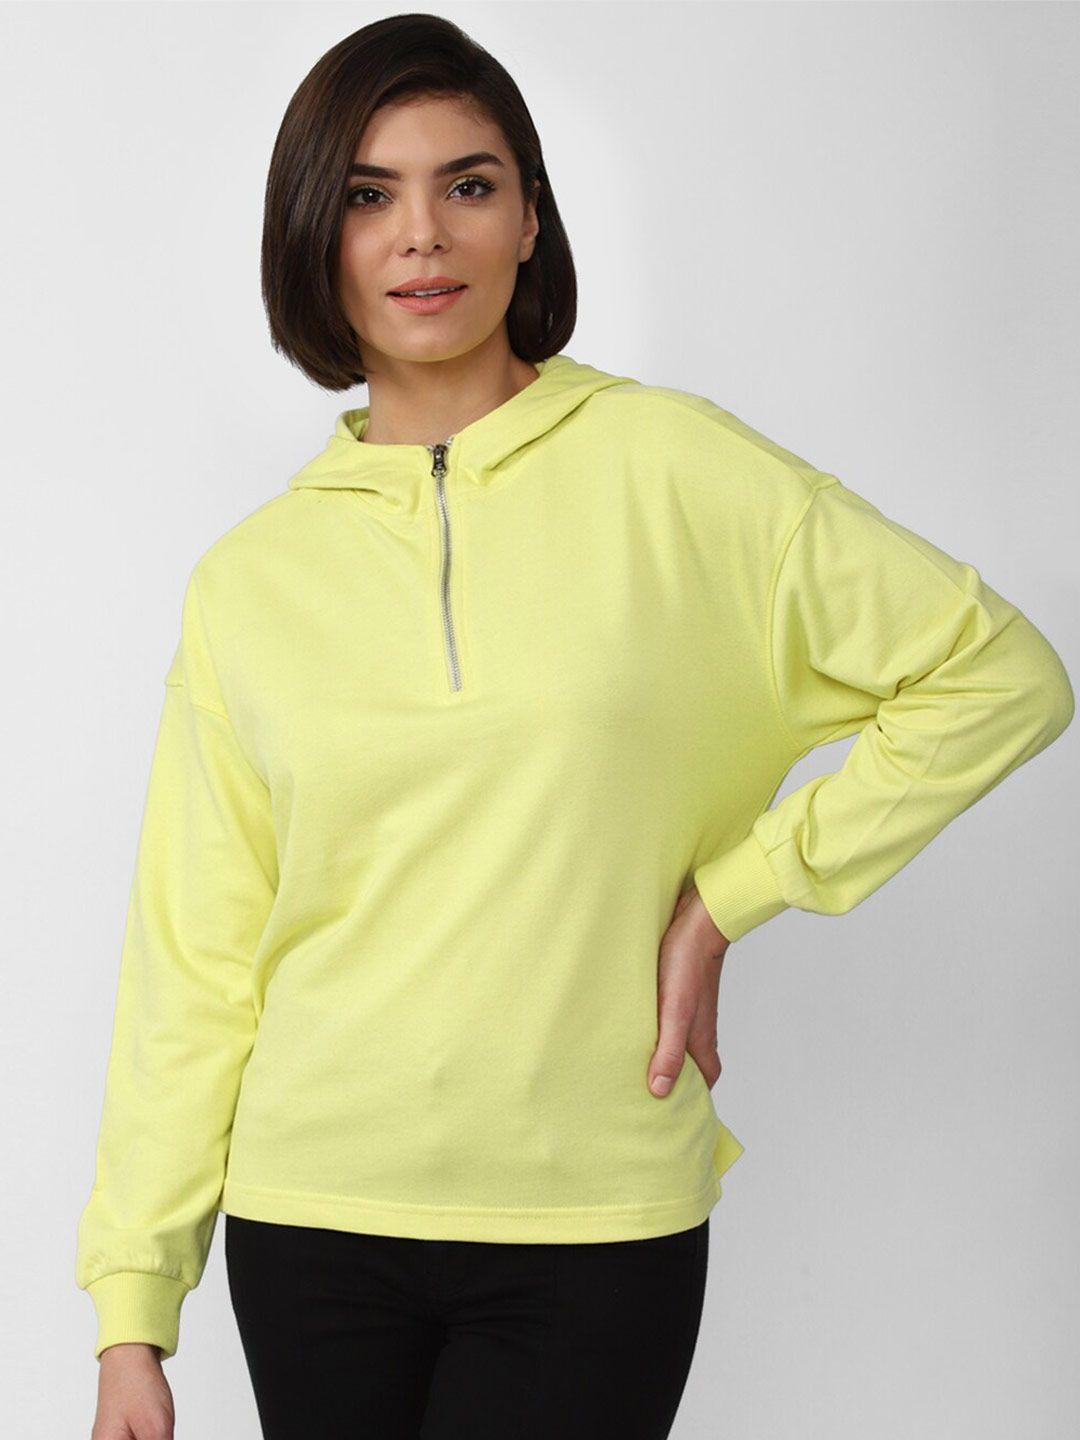 forever-21-women-yellow-hooded-sweatshirt